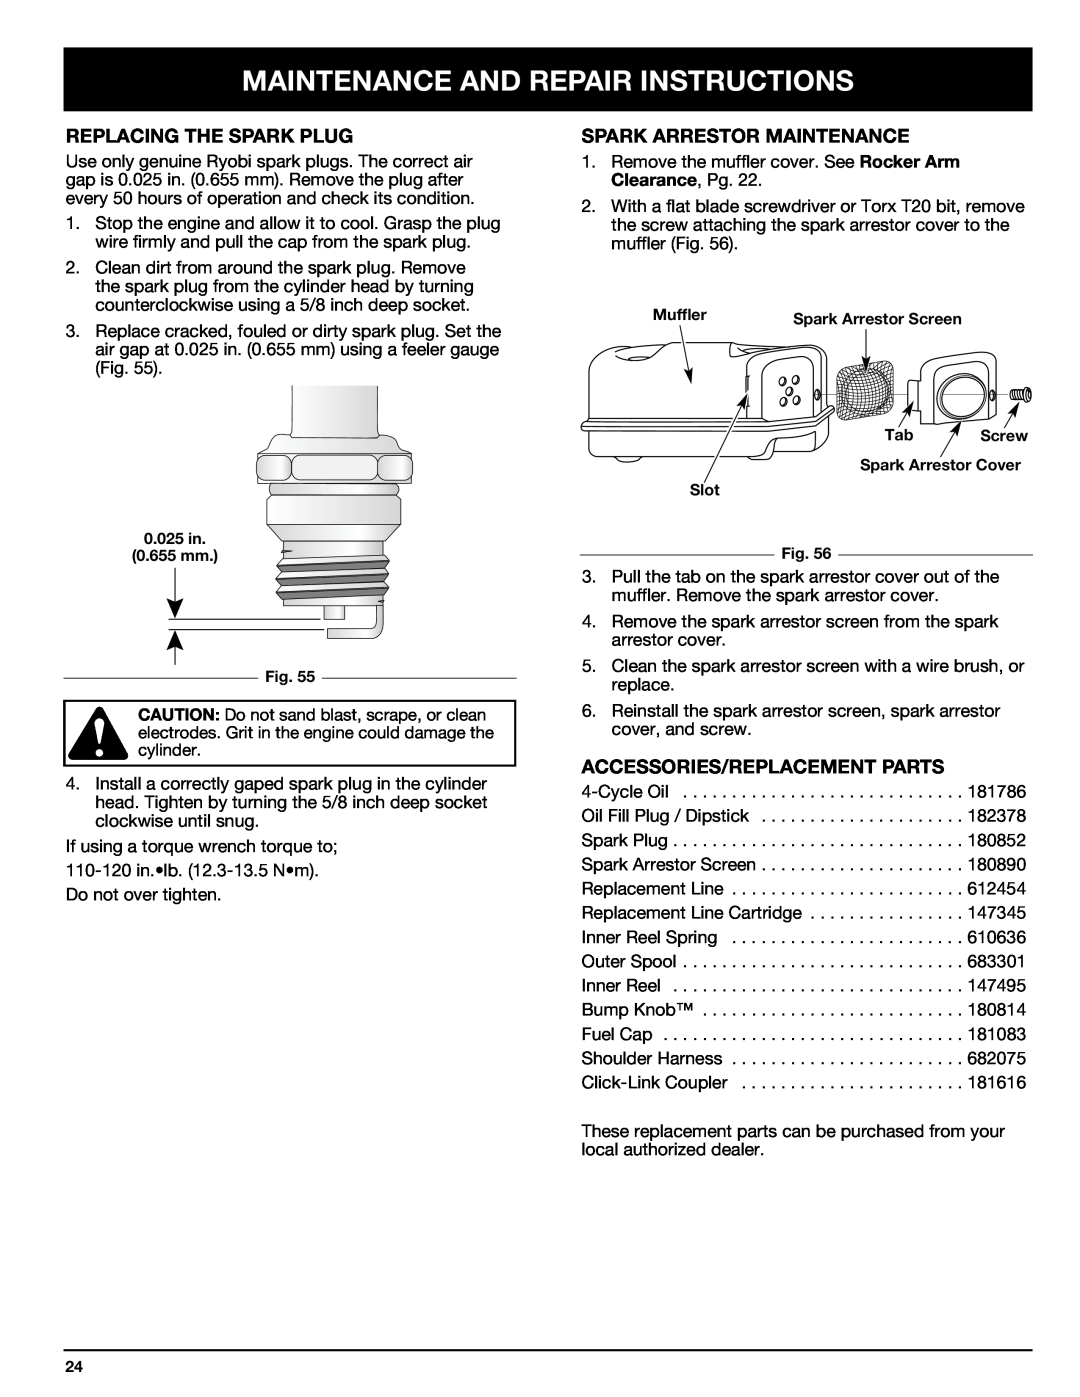 Ryobi 890r manual Replacing The Spark Plug, Spark Arrestor Maintenance, Accessories/Replacement Parts 